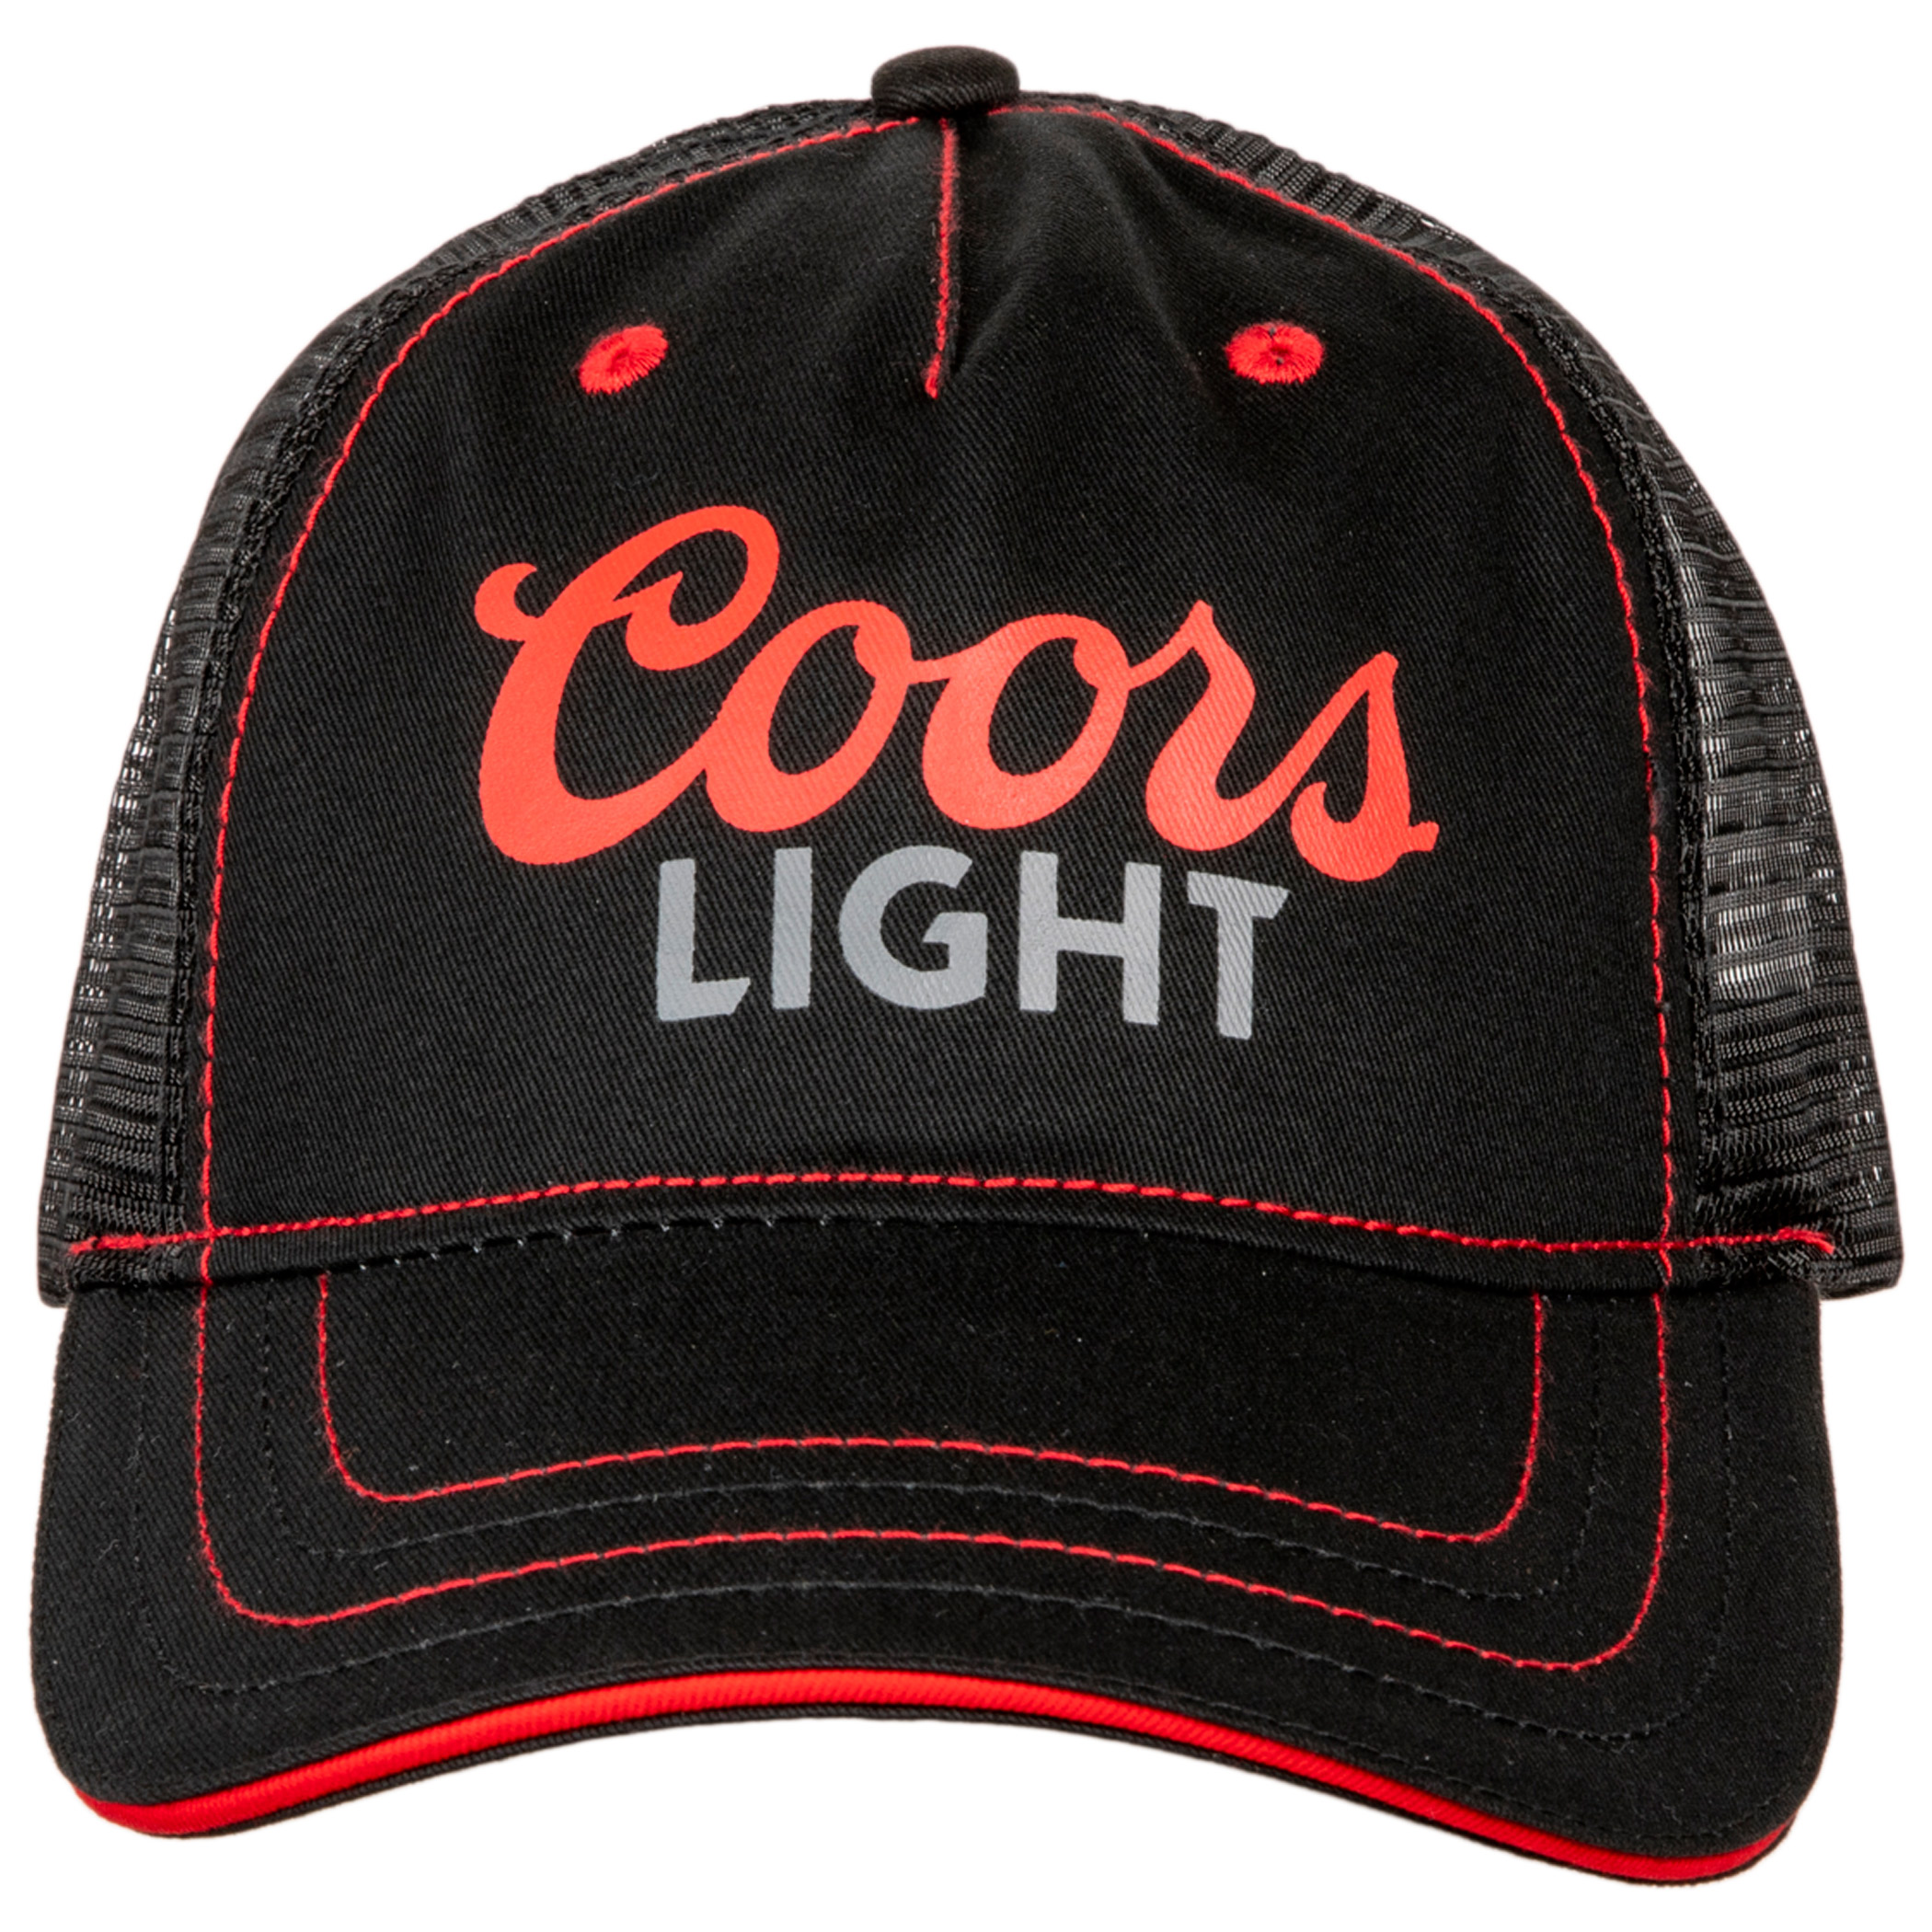 Coors Light Logo Adjustable Velcro Mesh Trucker Hat